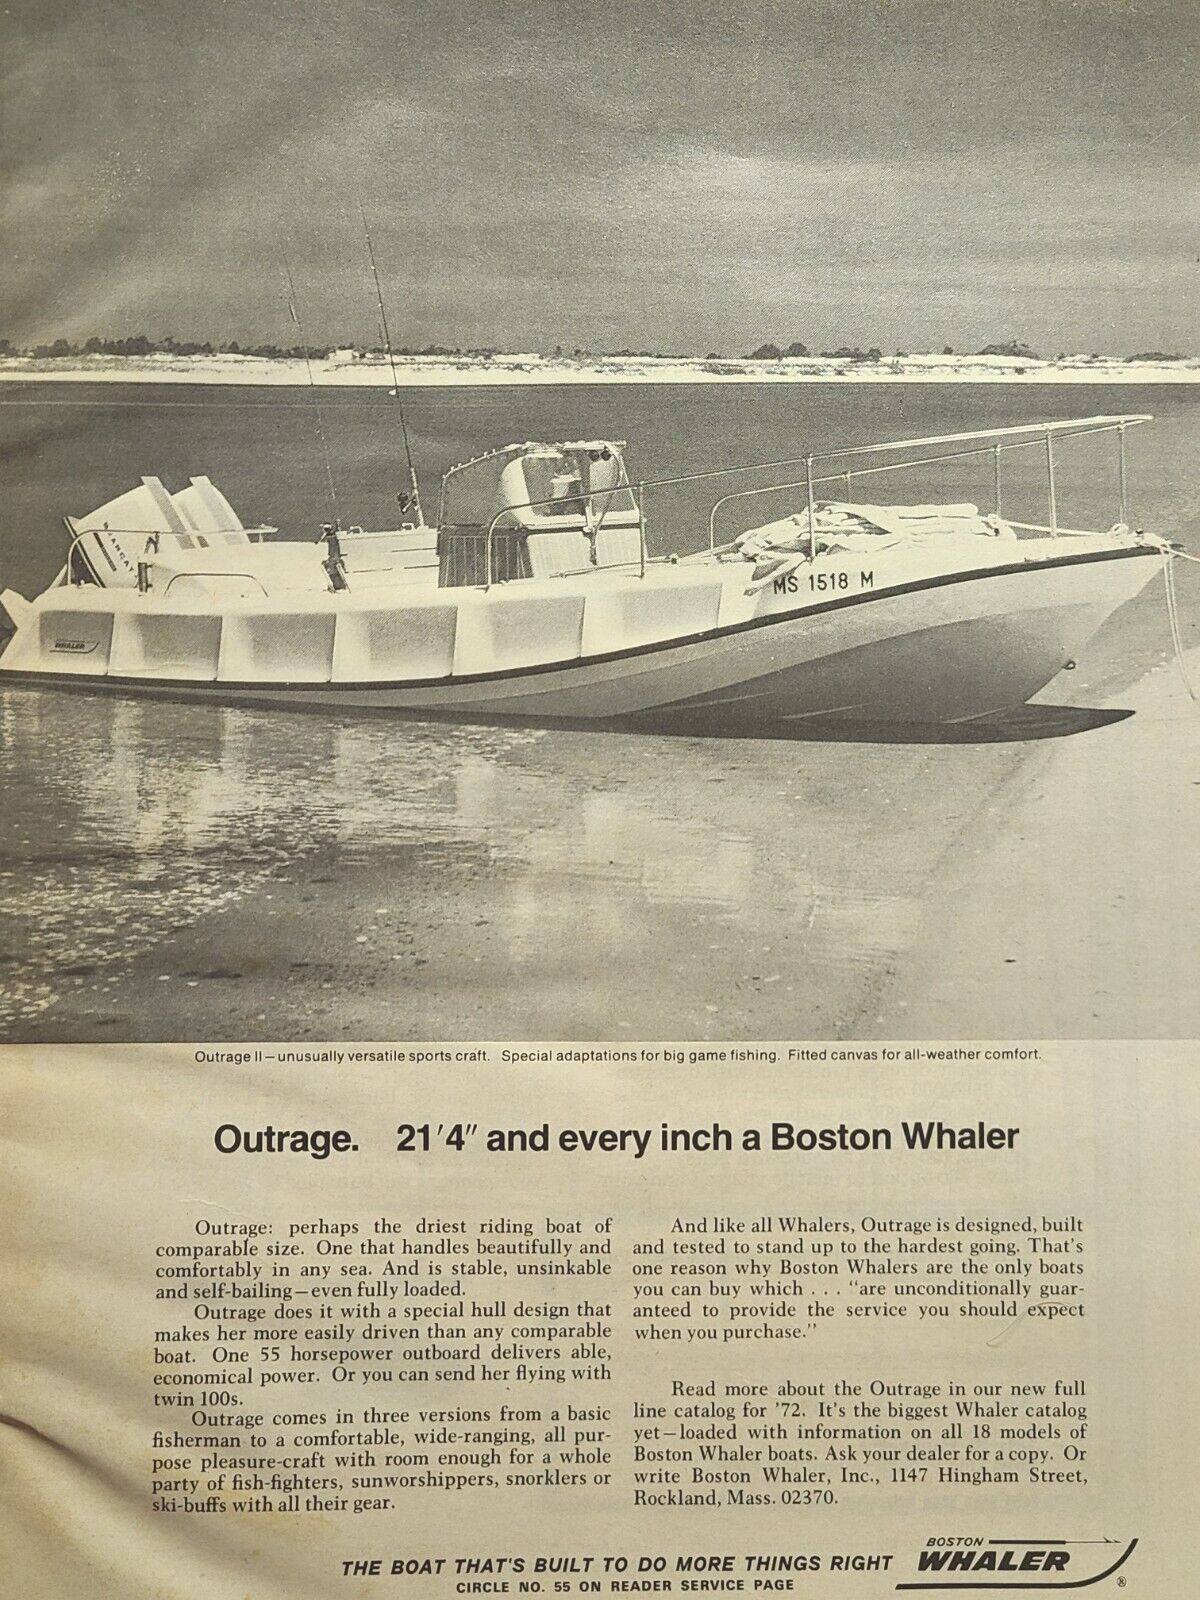 Boston Whaler Outrage Boat for Big Game Fishing Rocklands Vintage Print Ad 1972